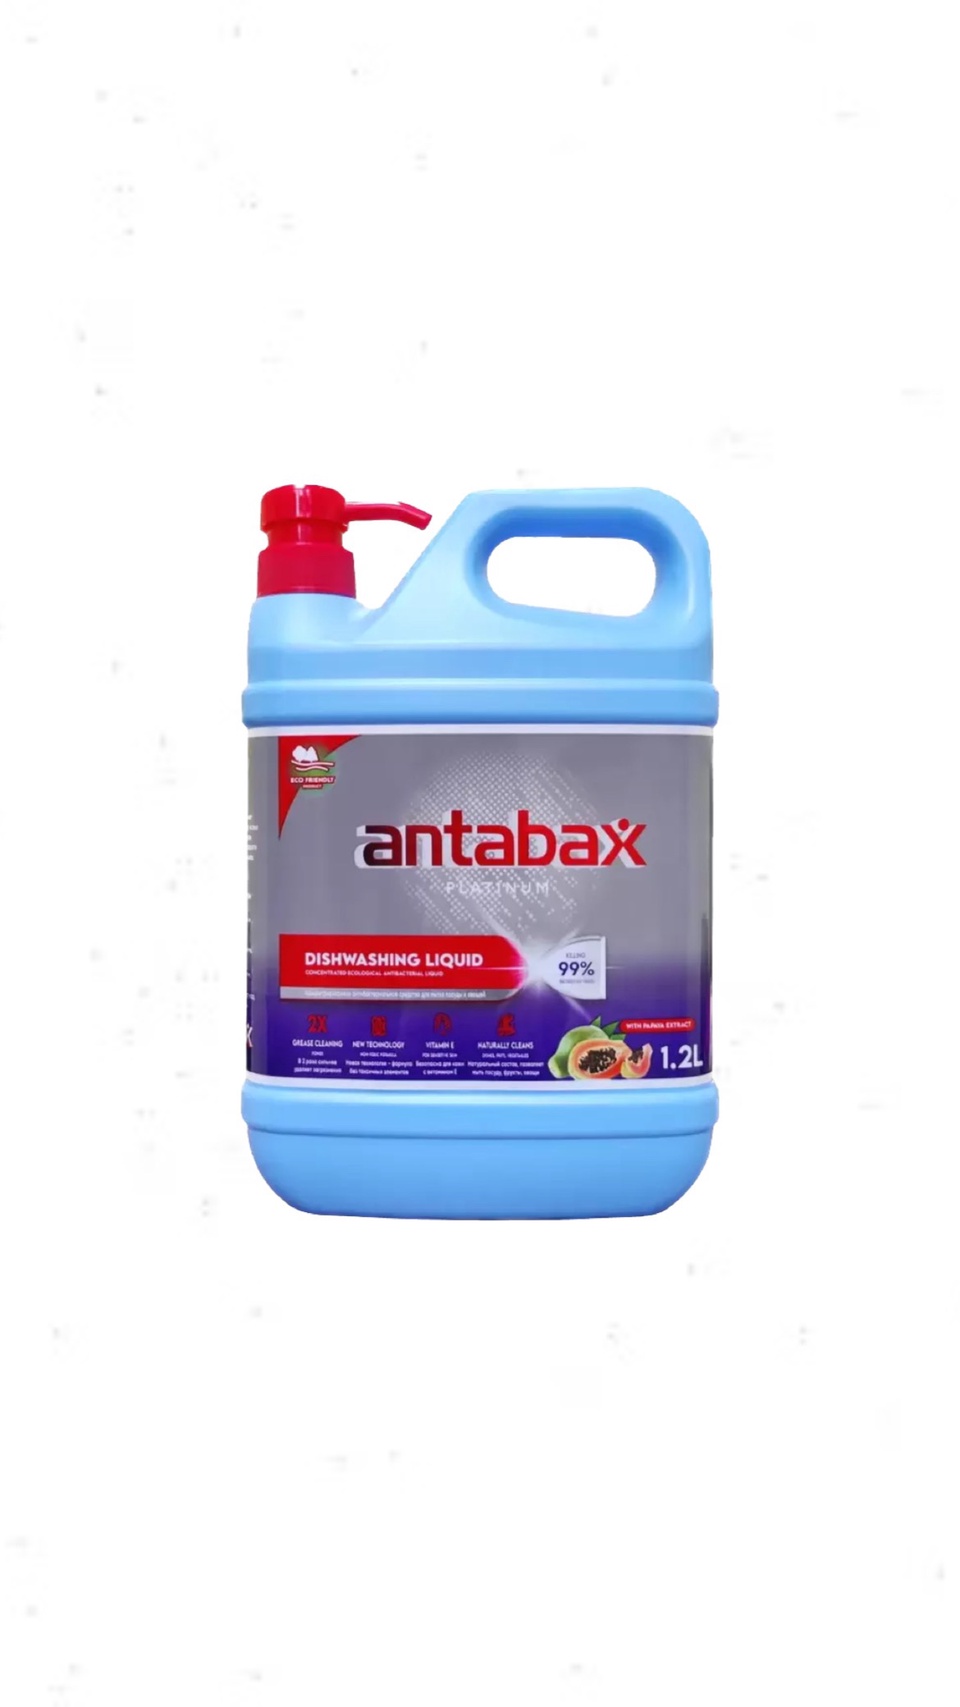 Средство для посуды Antabax папайя 1,2 л - 400 ₽, заказать онлайн.